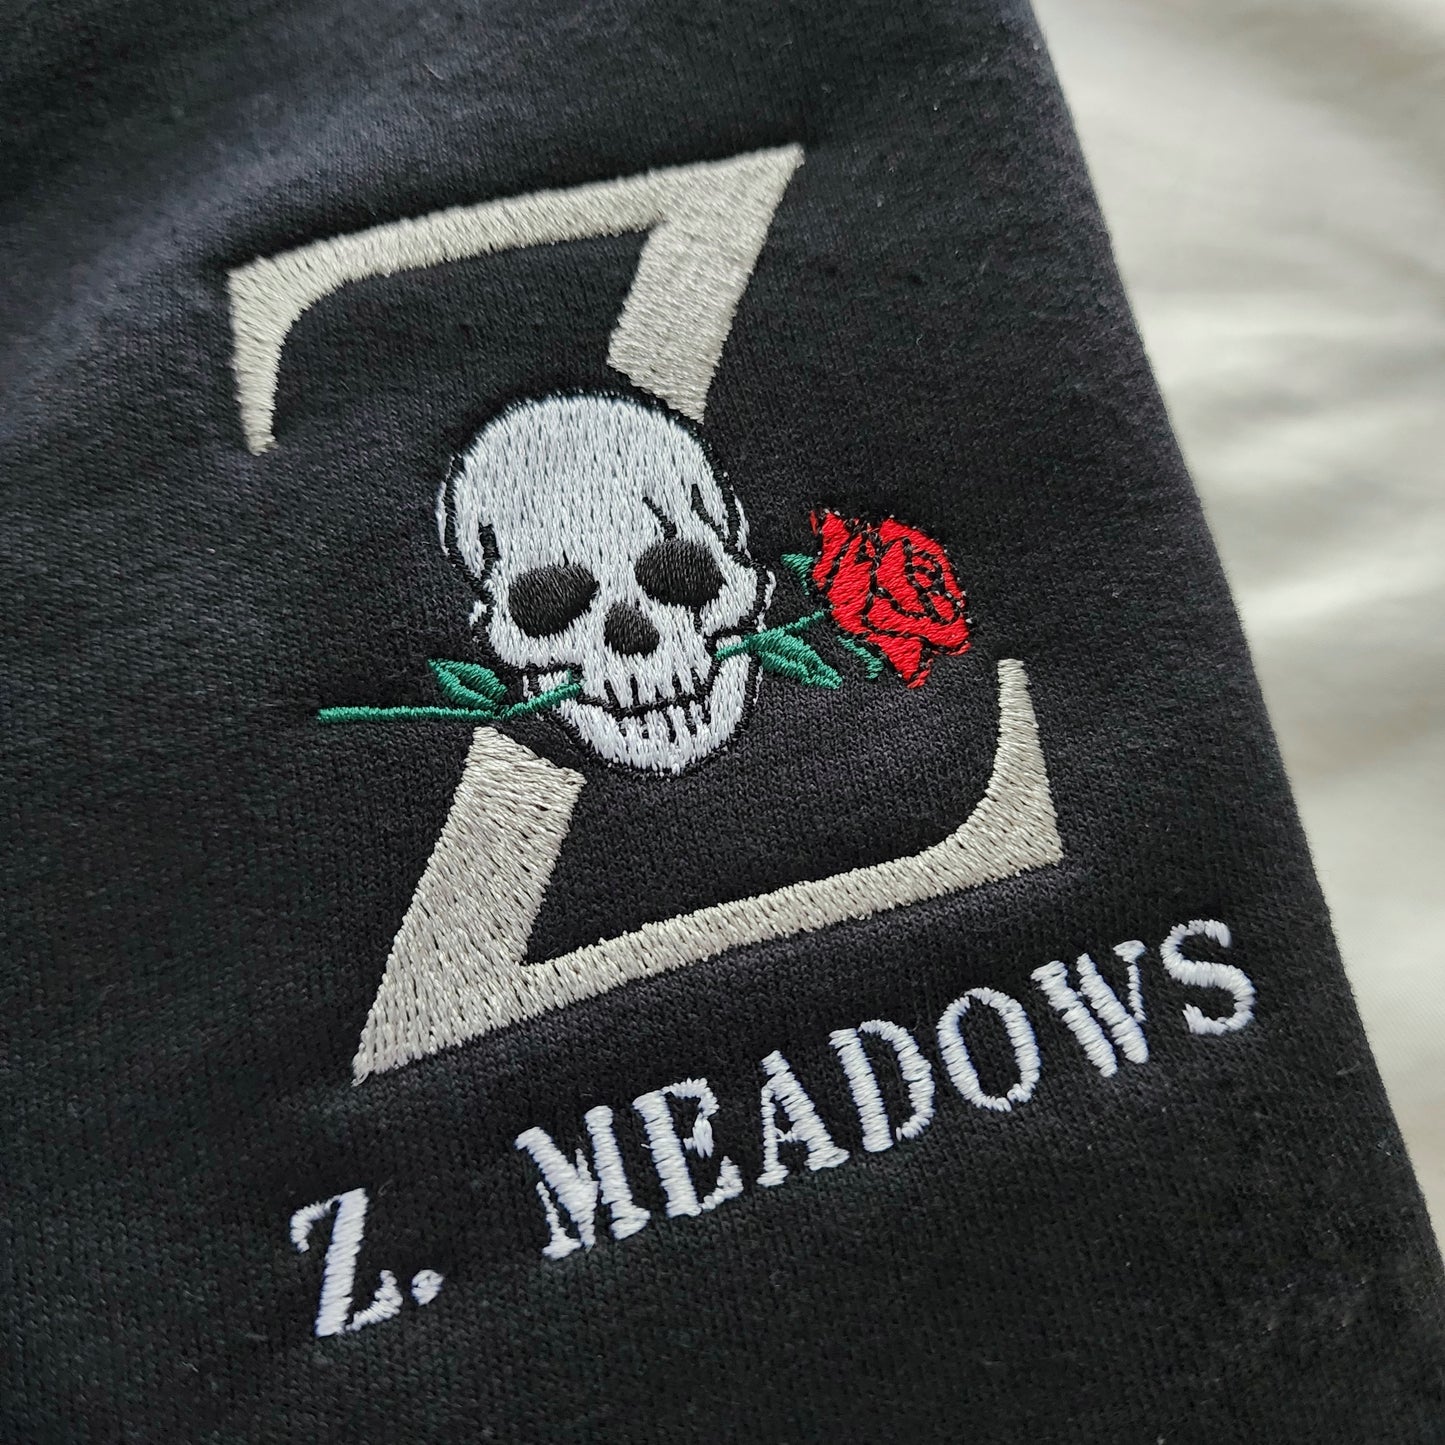 Zade Meadows 'Z' Uniform